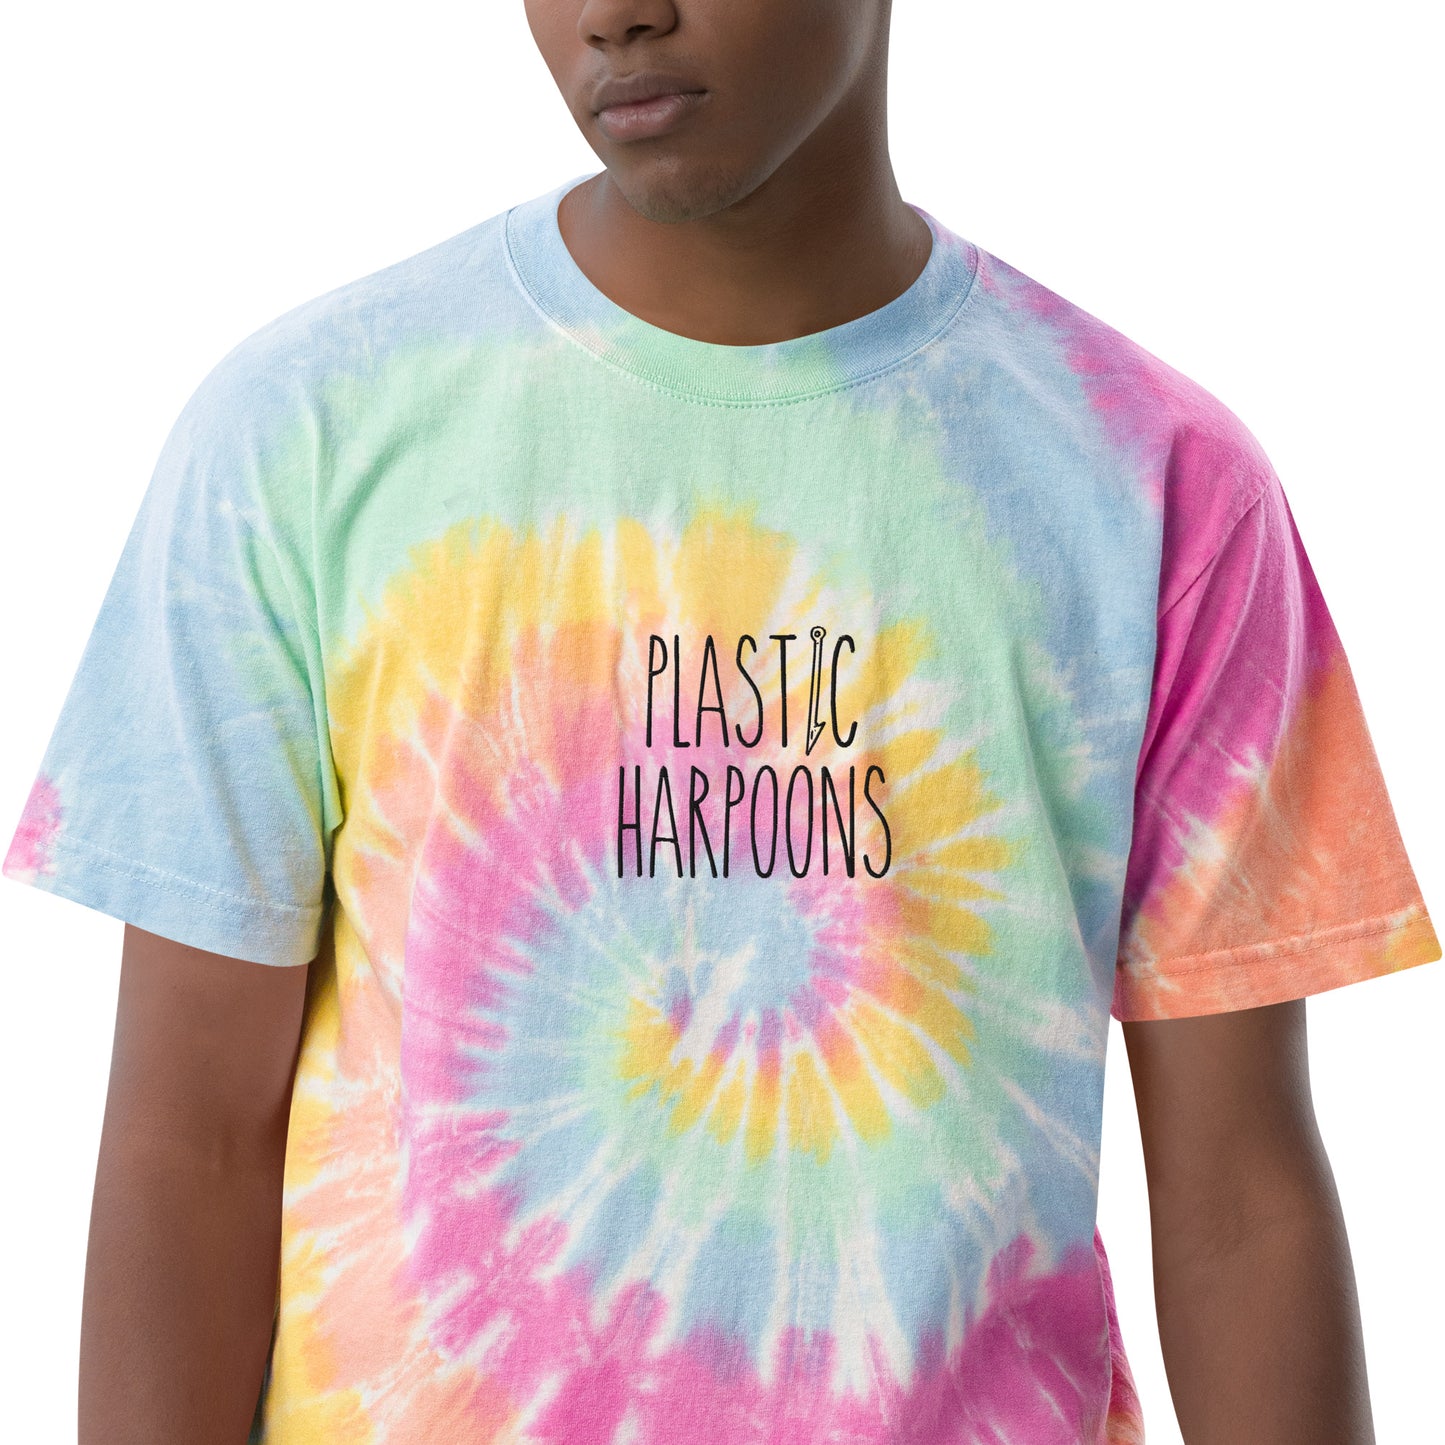 Plastic Harpoons Tie-dye Shirt